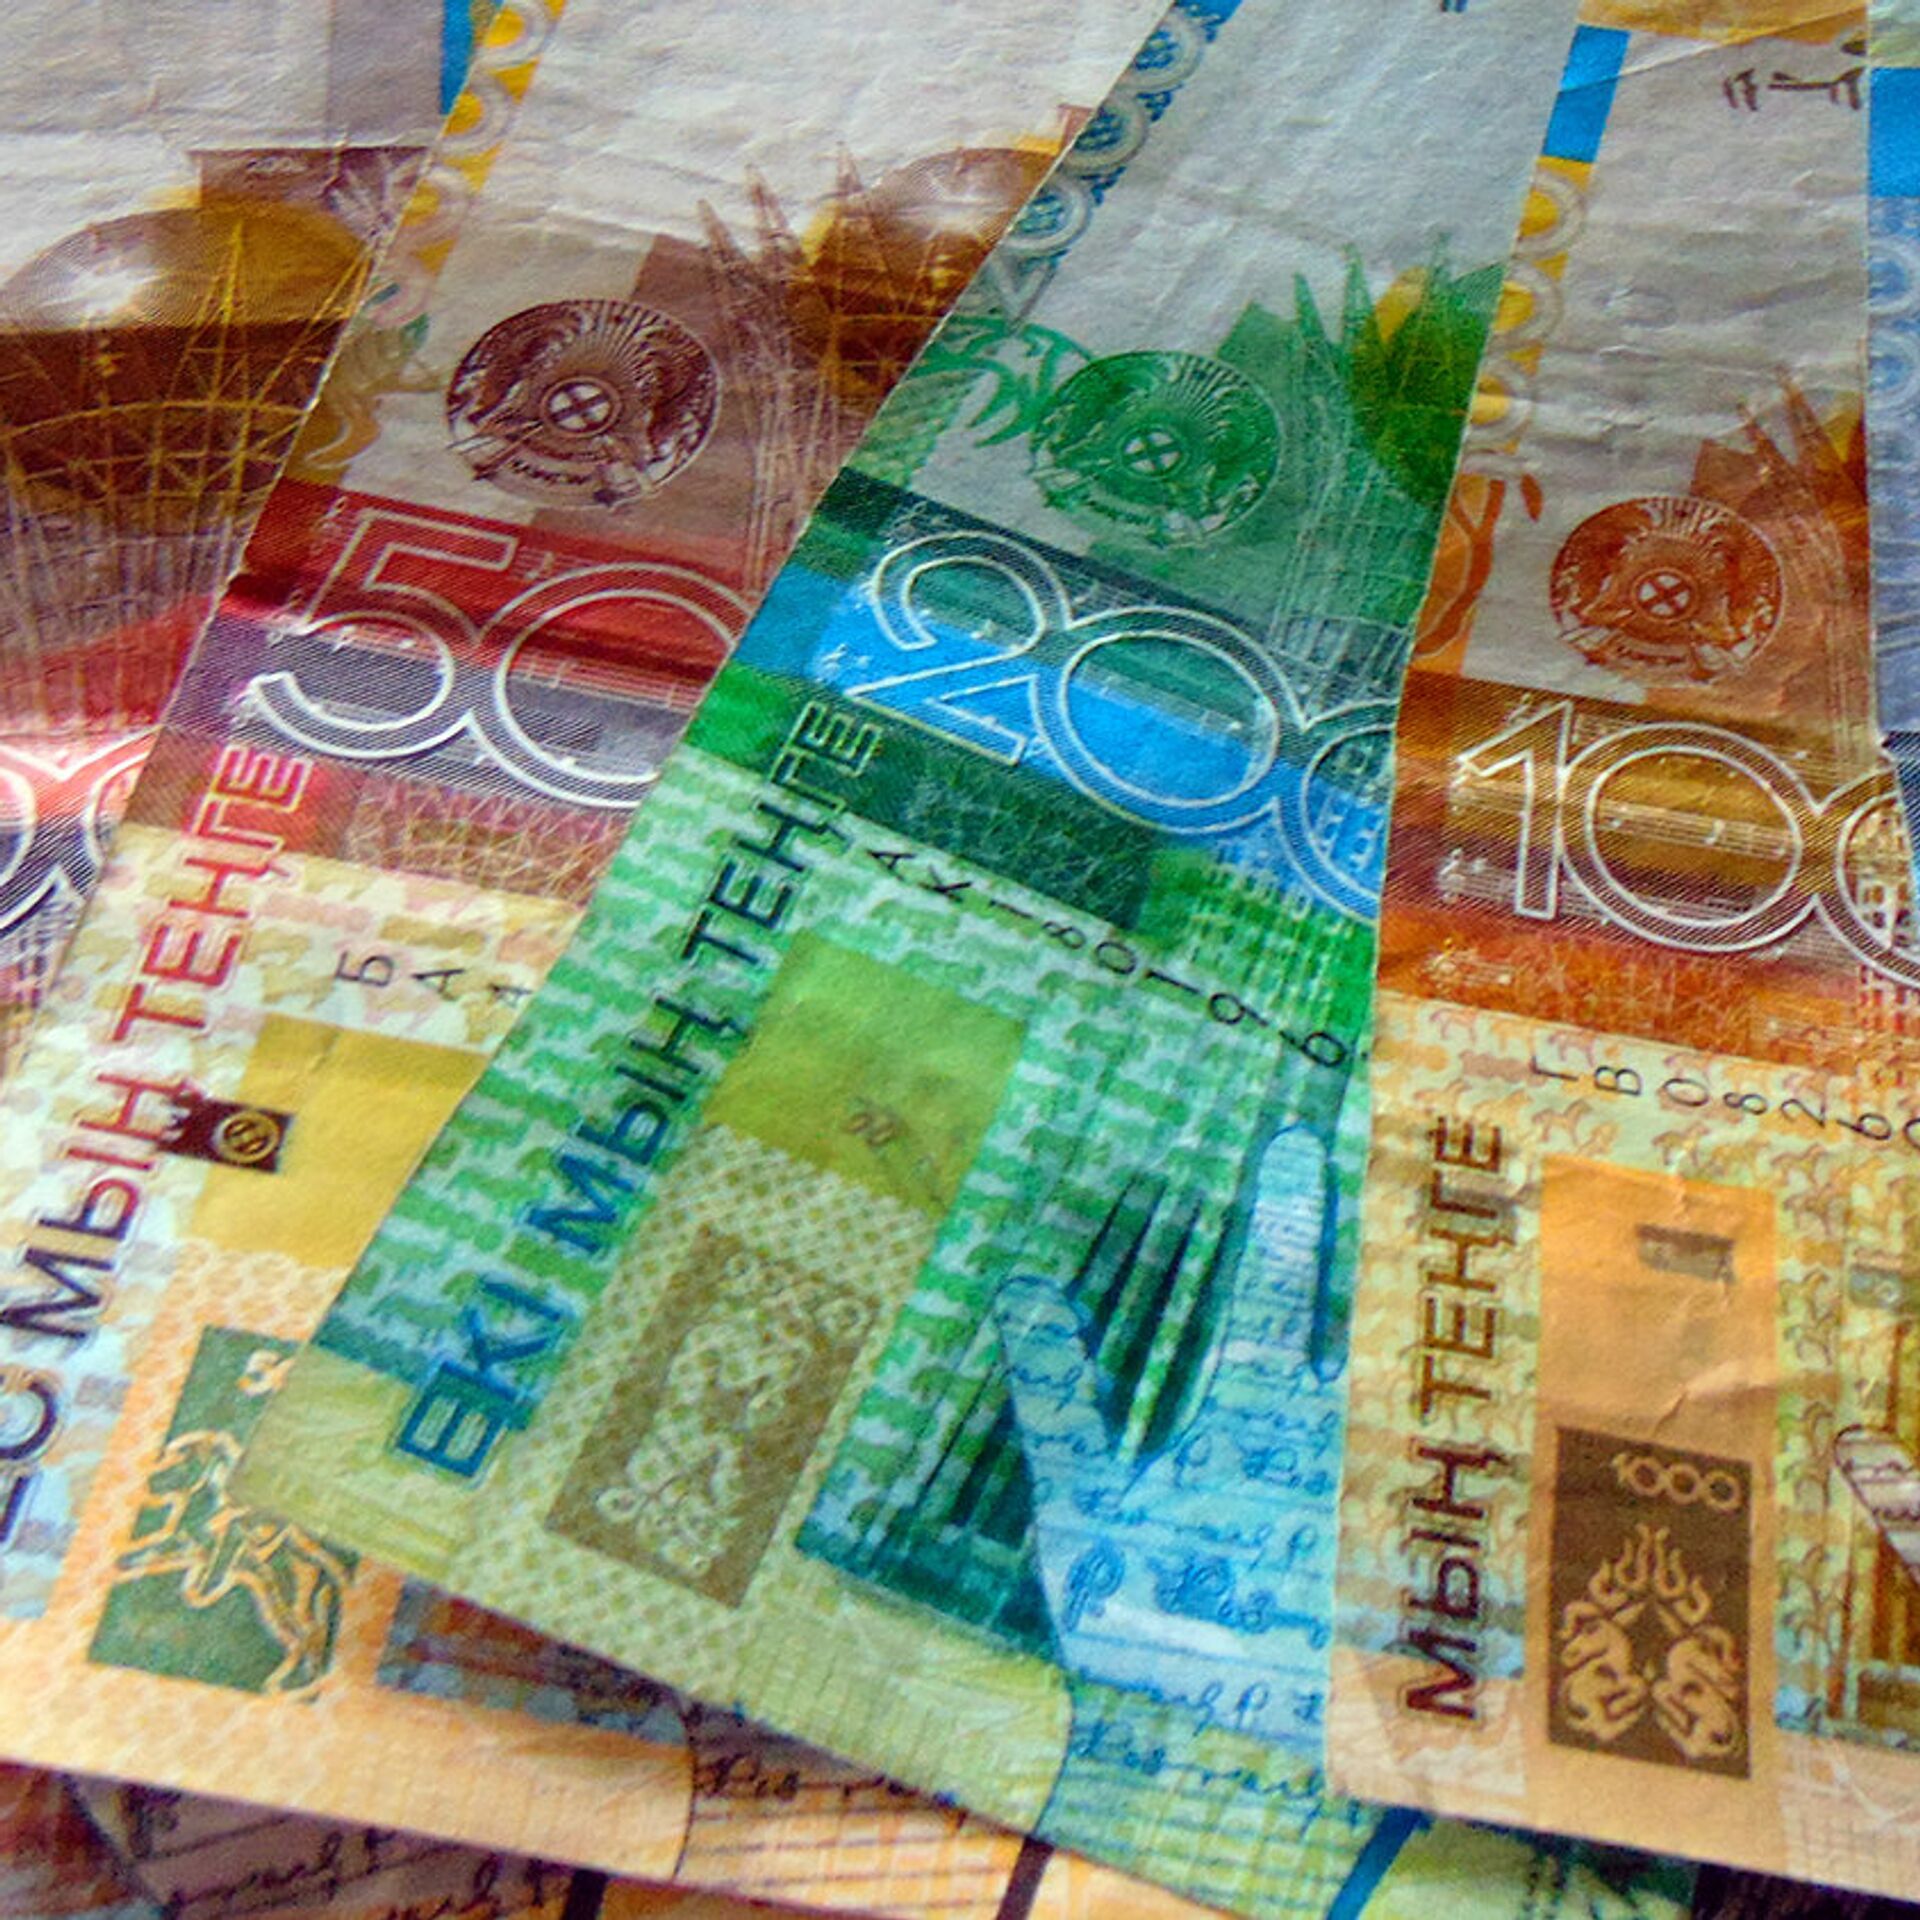 Тенге валюта казахстана рубль